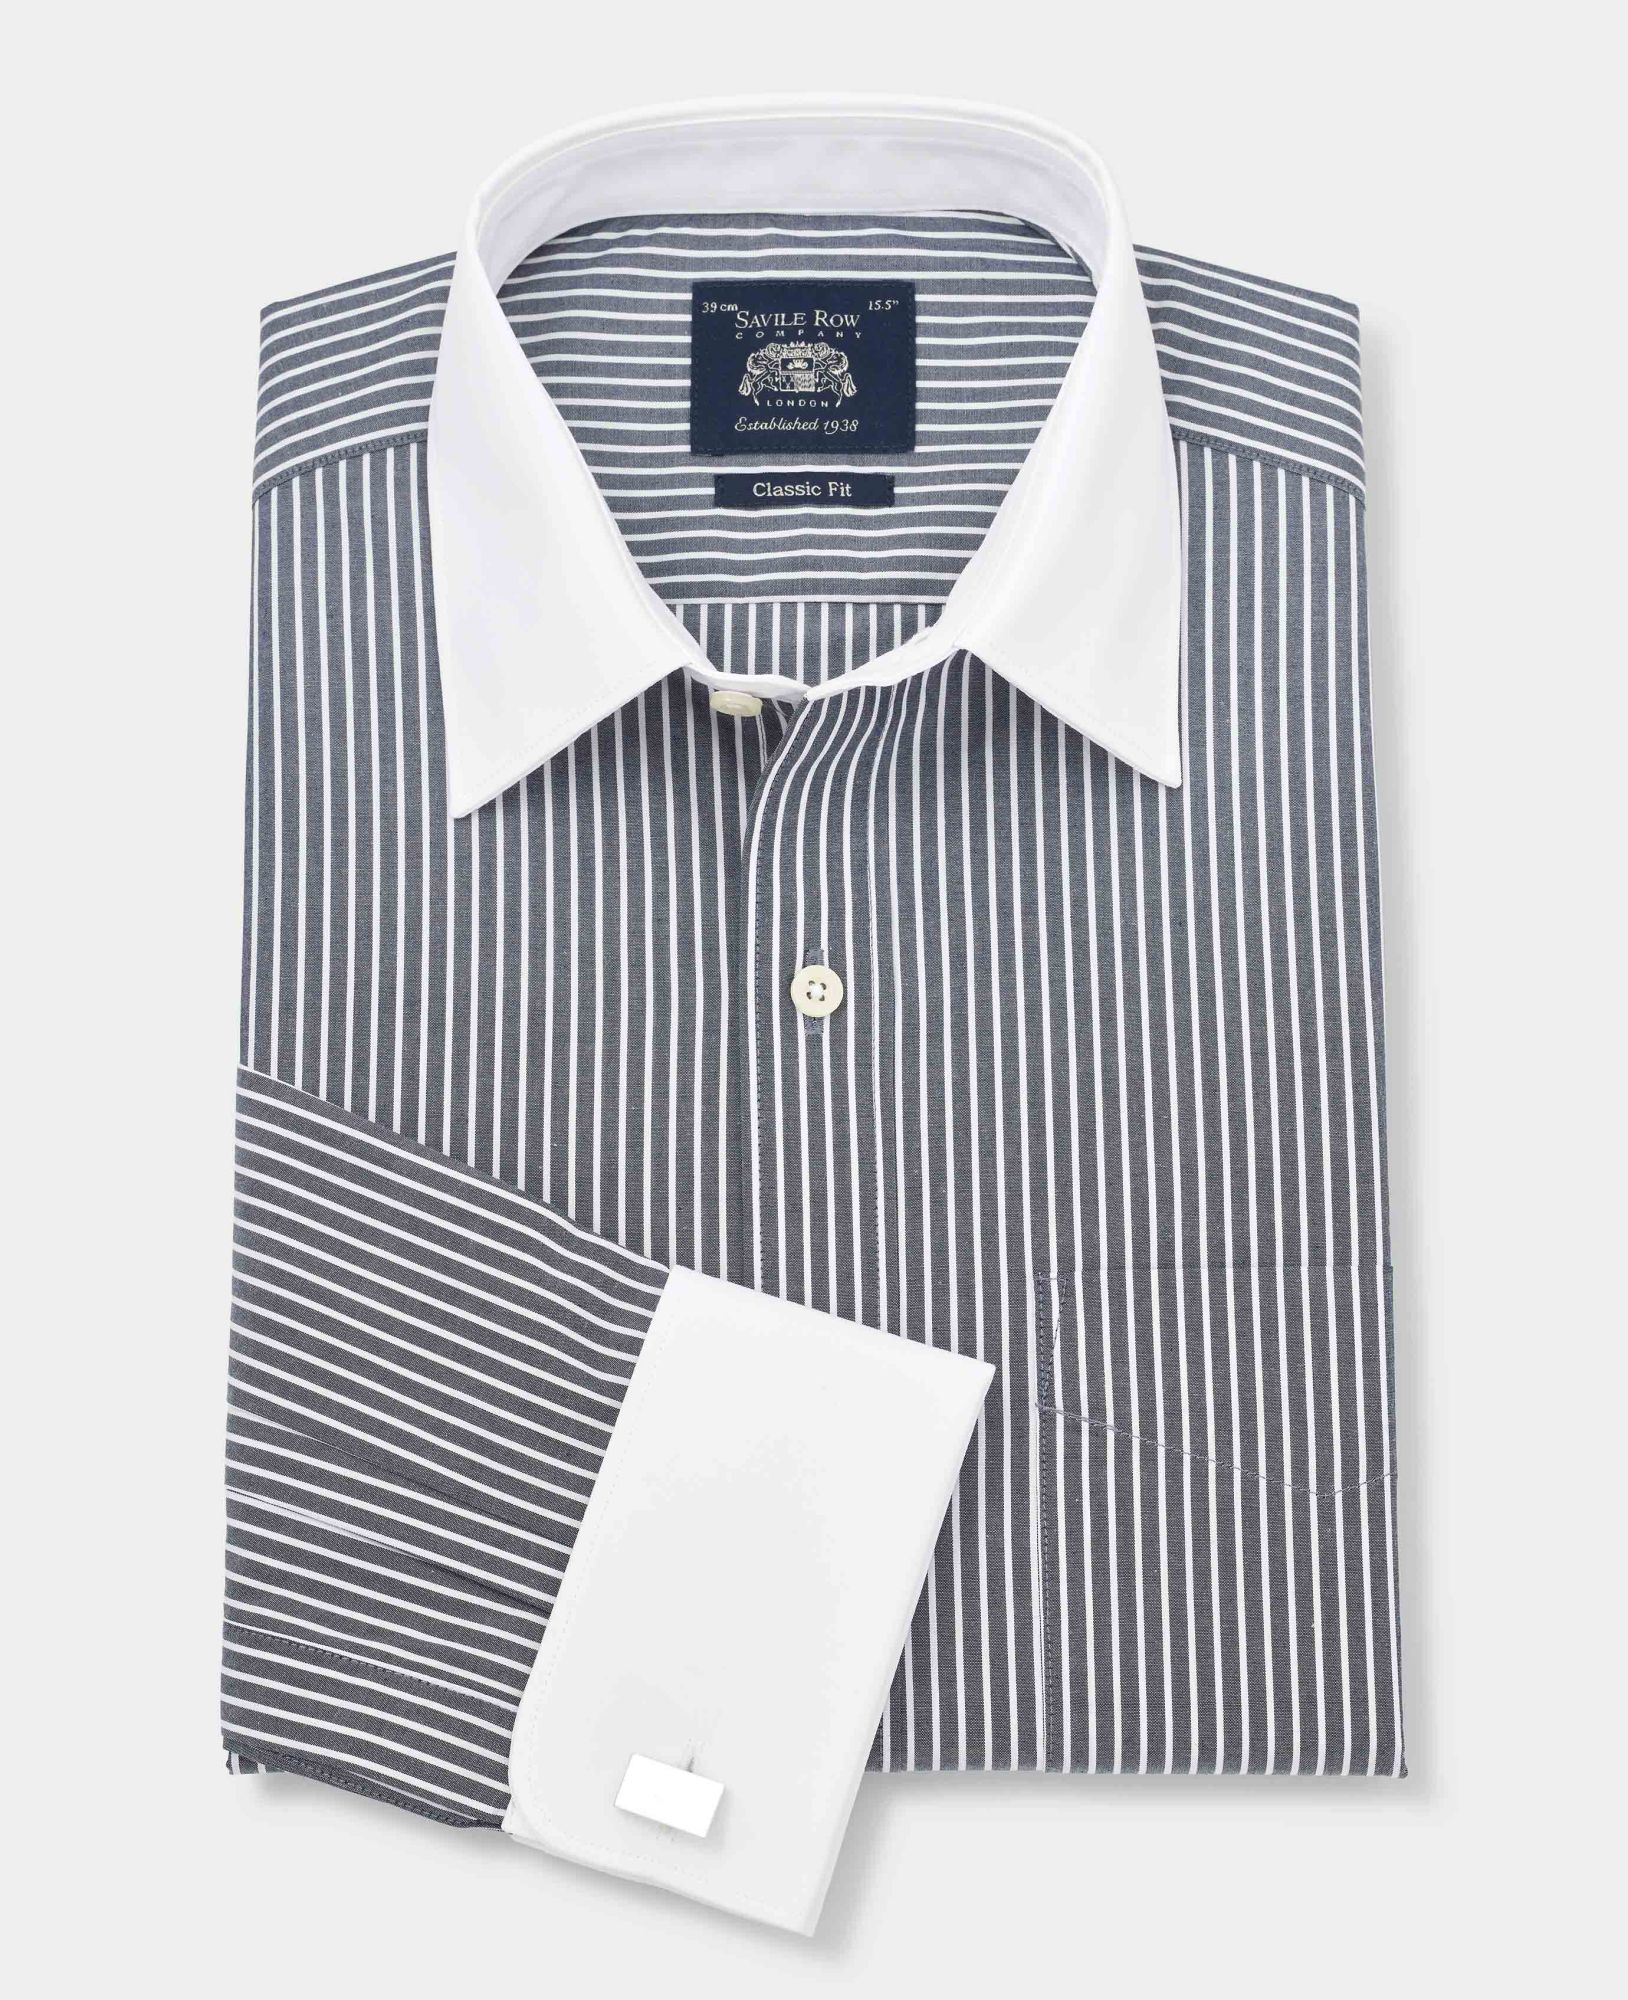 Black White Stripe Classic Fit Shirt With White Collar & Cuffs - Double Cuff 20